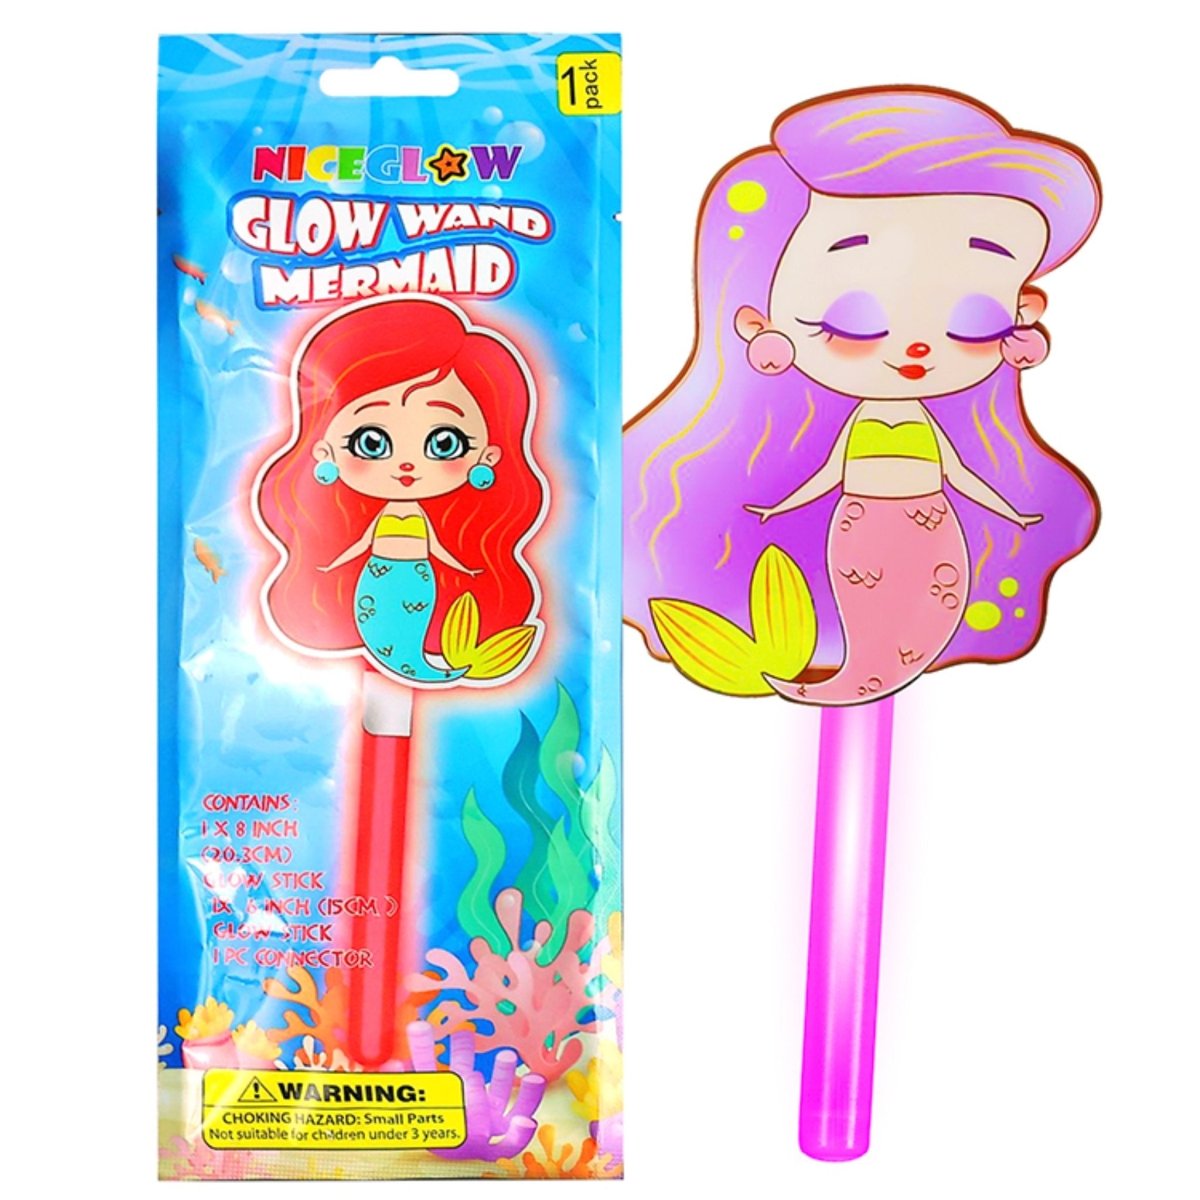 Mermaid Glow In The Dark Wand - Kids Party Craft